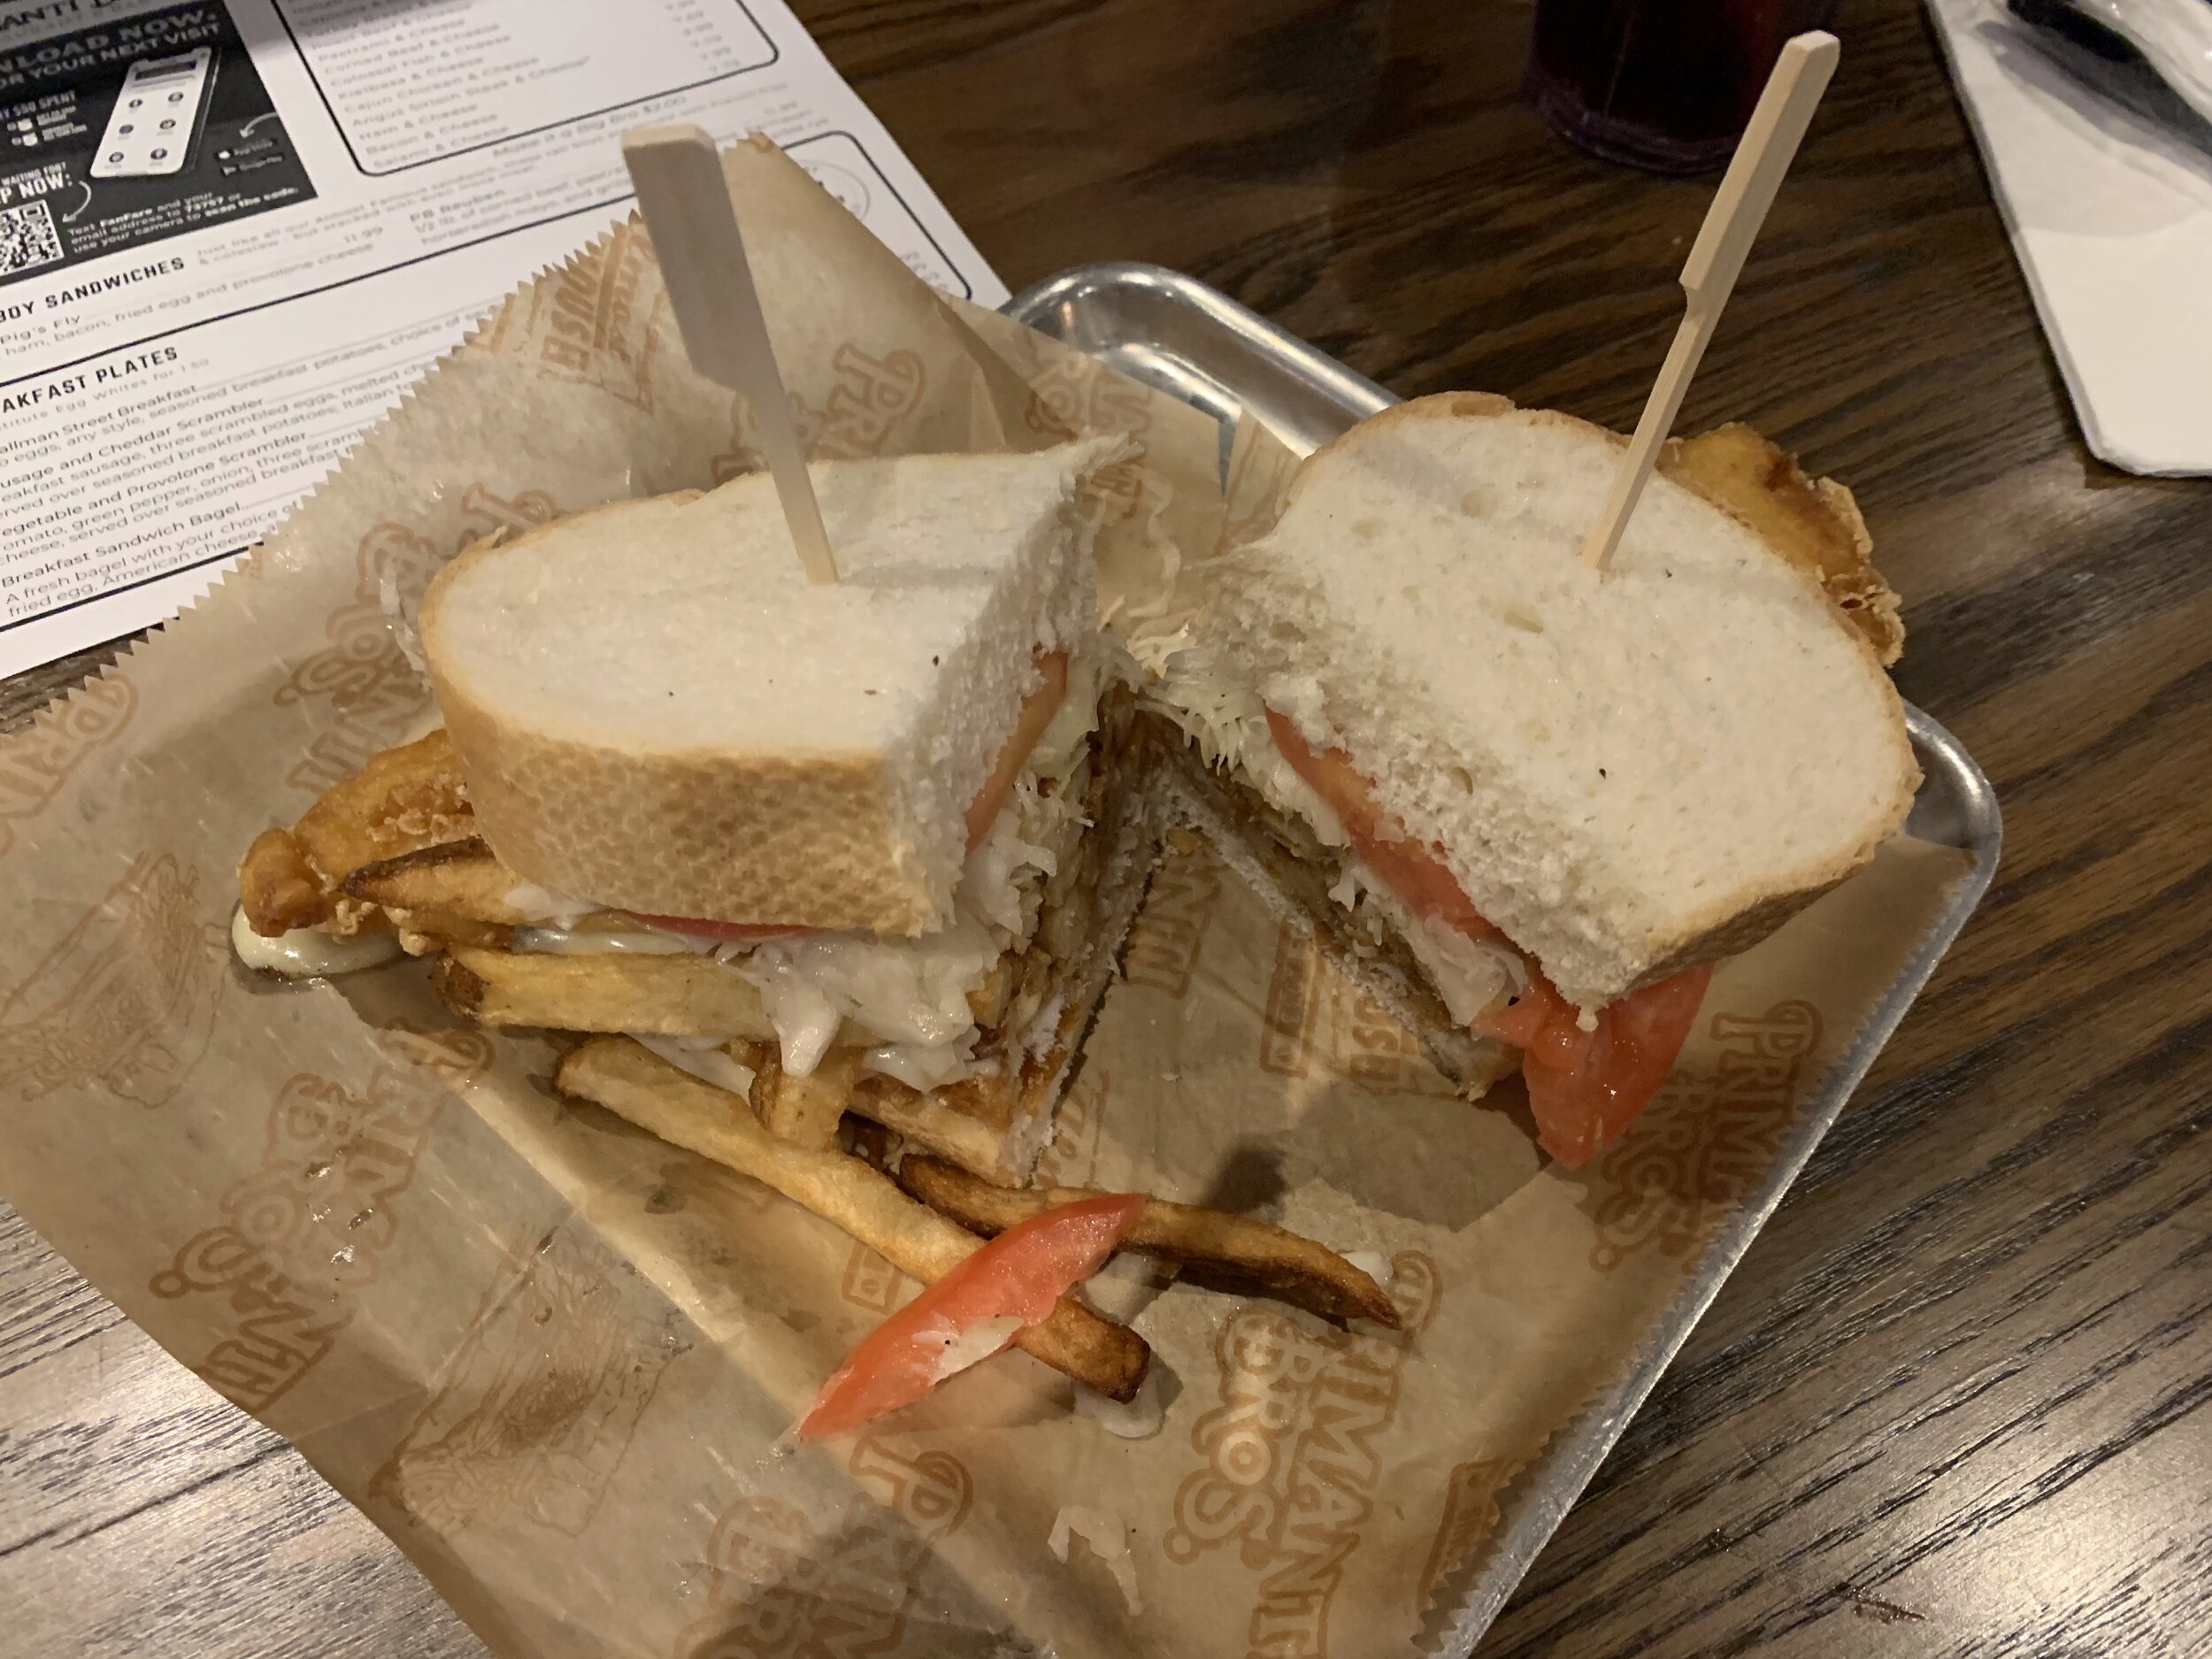 Fish Sandwich